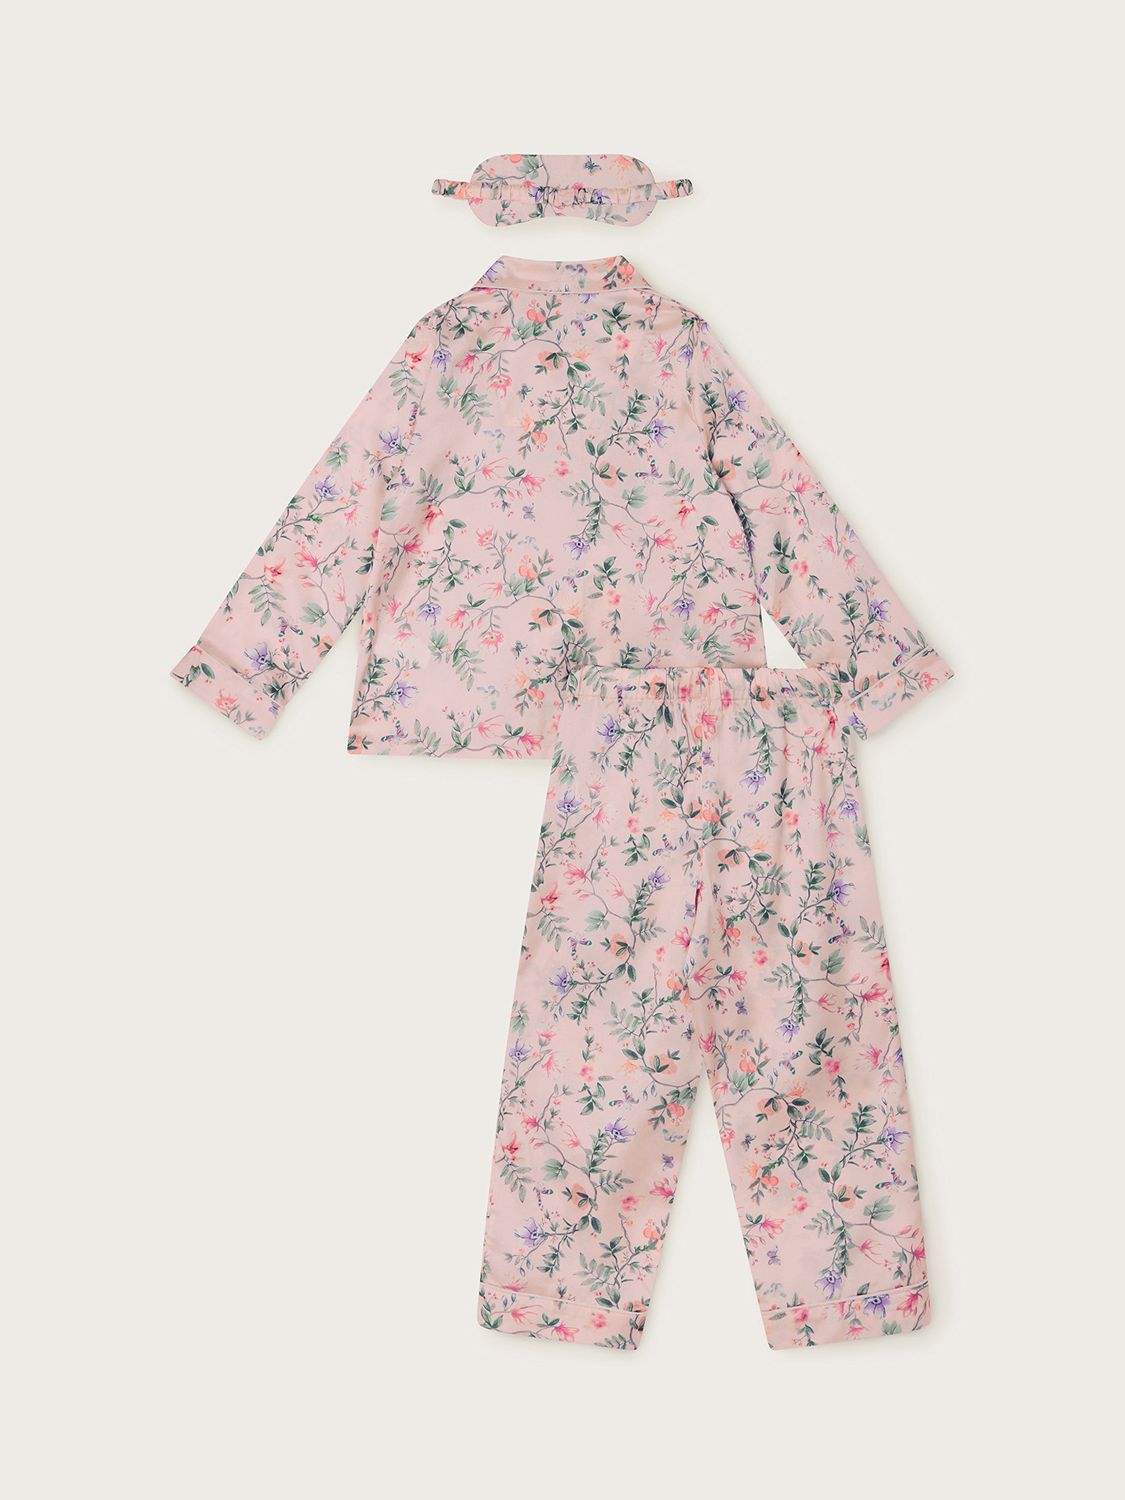 Monsoon Kids' Hydrangea Print Eye Mask & Pyjamas Set, Pink/Multi, 2-3 years